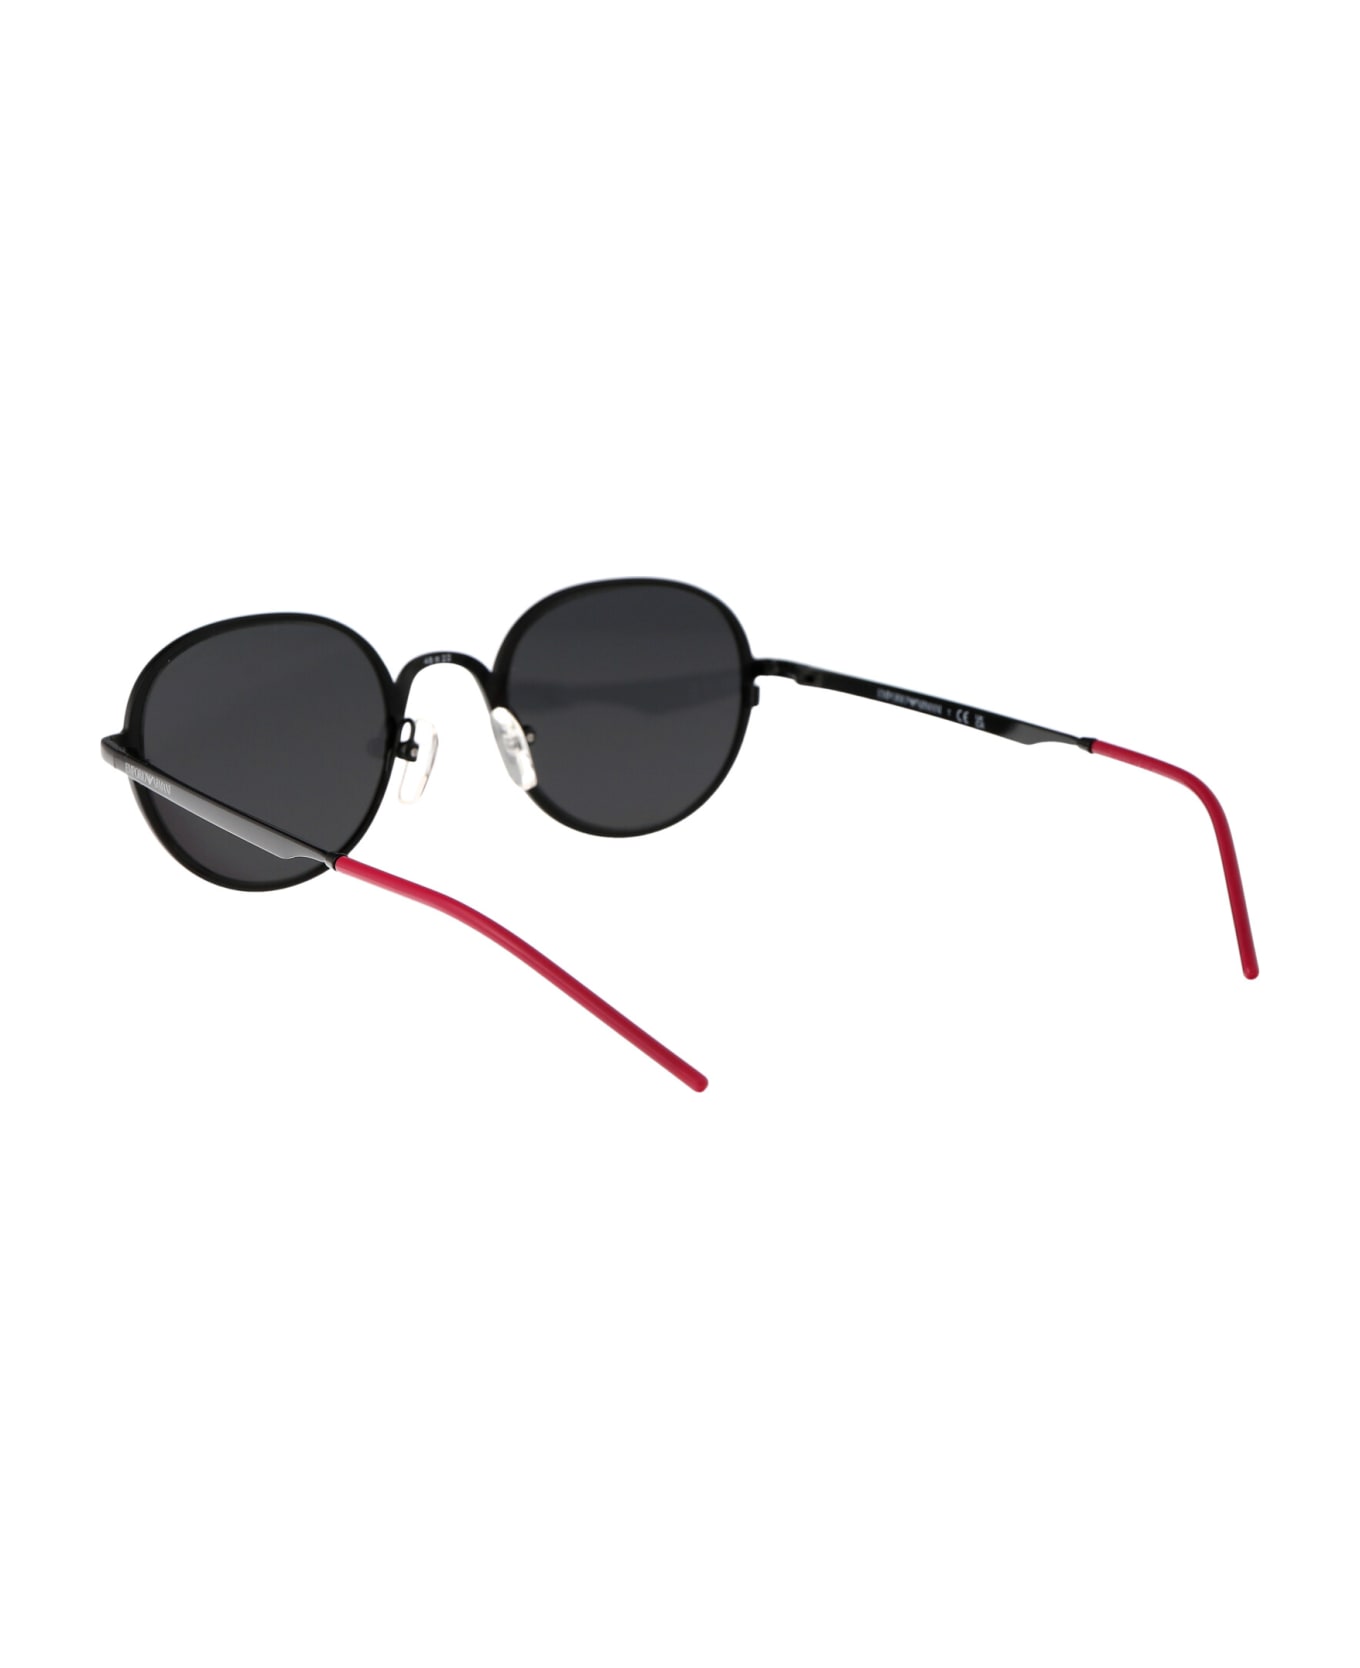 Emporio Armani 0ea2151 Sunglasses - 337487 Shiny Black/Fuchsia Dark Grey サングラス